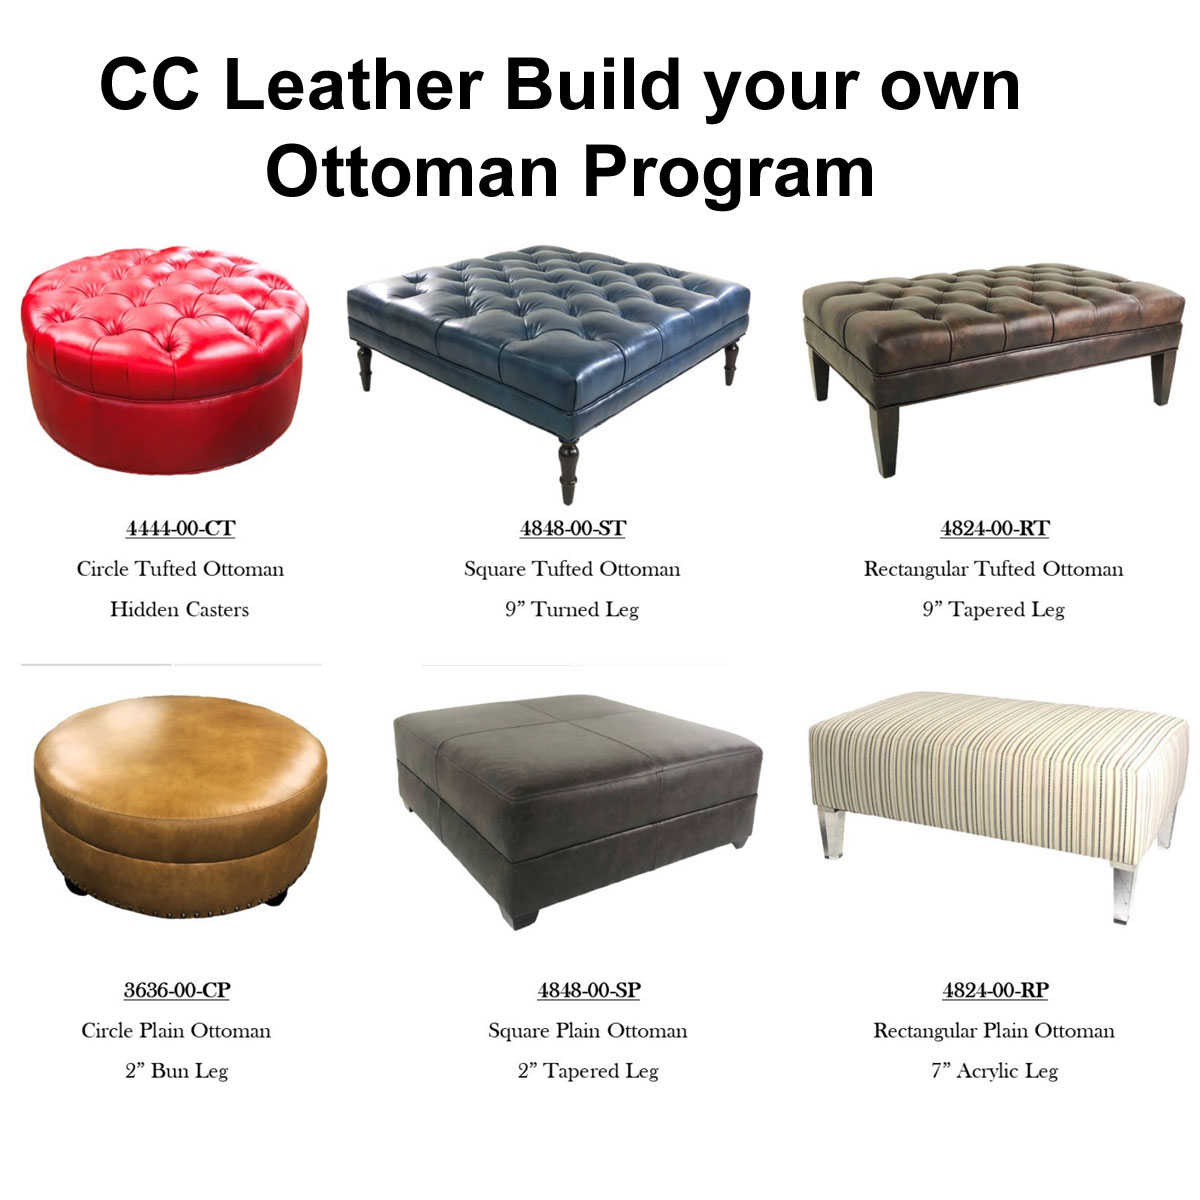   Carolina Custom Leather Build Your Own Ottoman Program